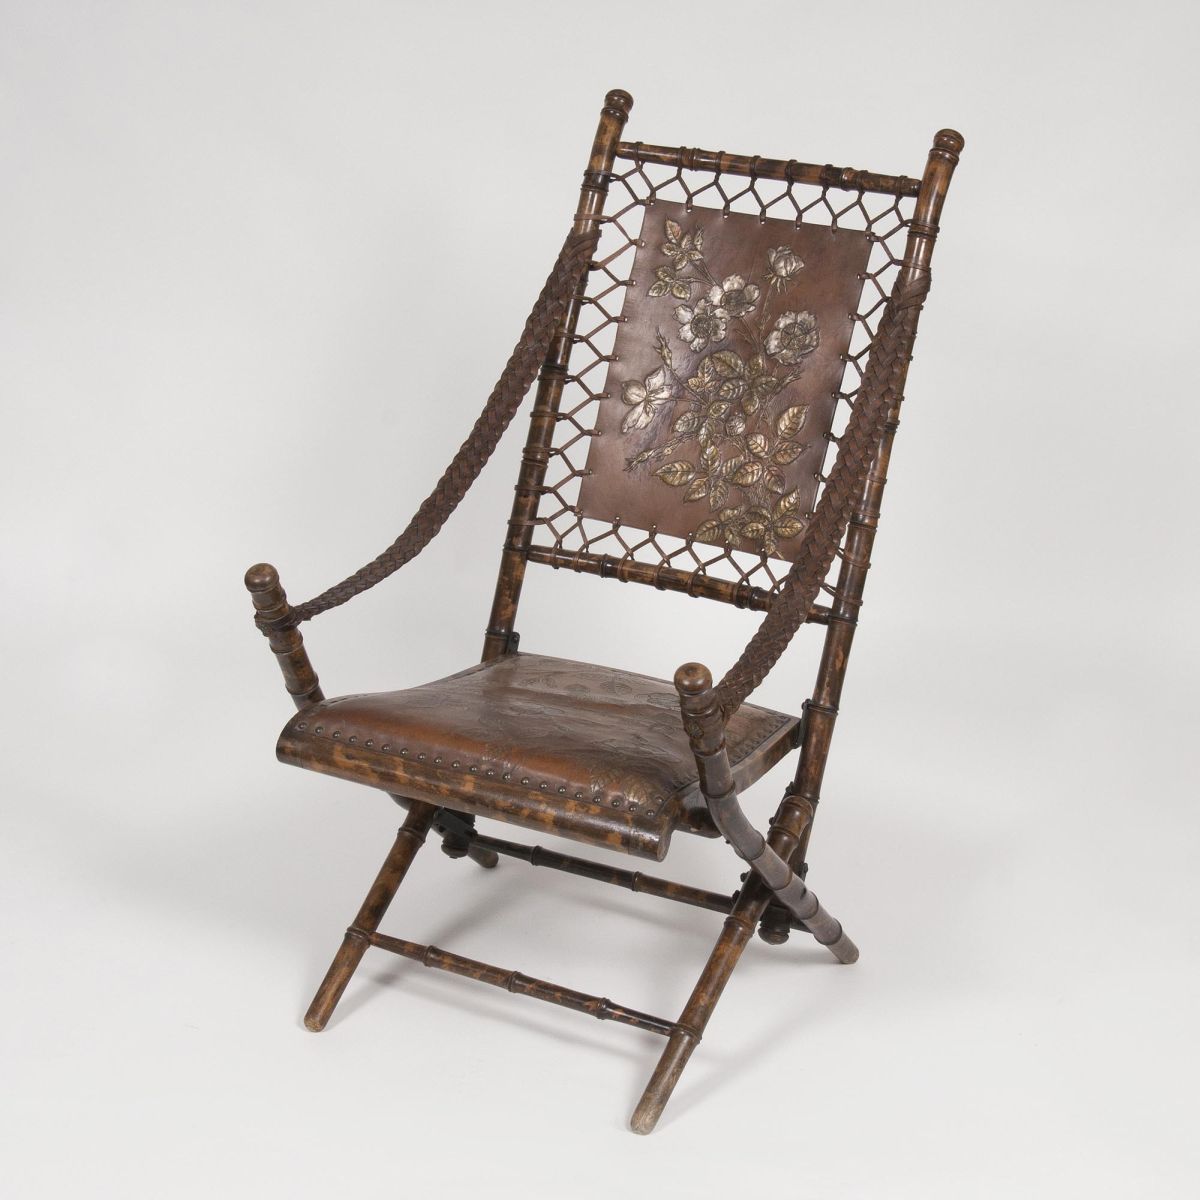 An Extraordinary Bamboo Folding Chair